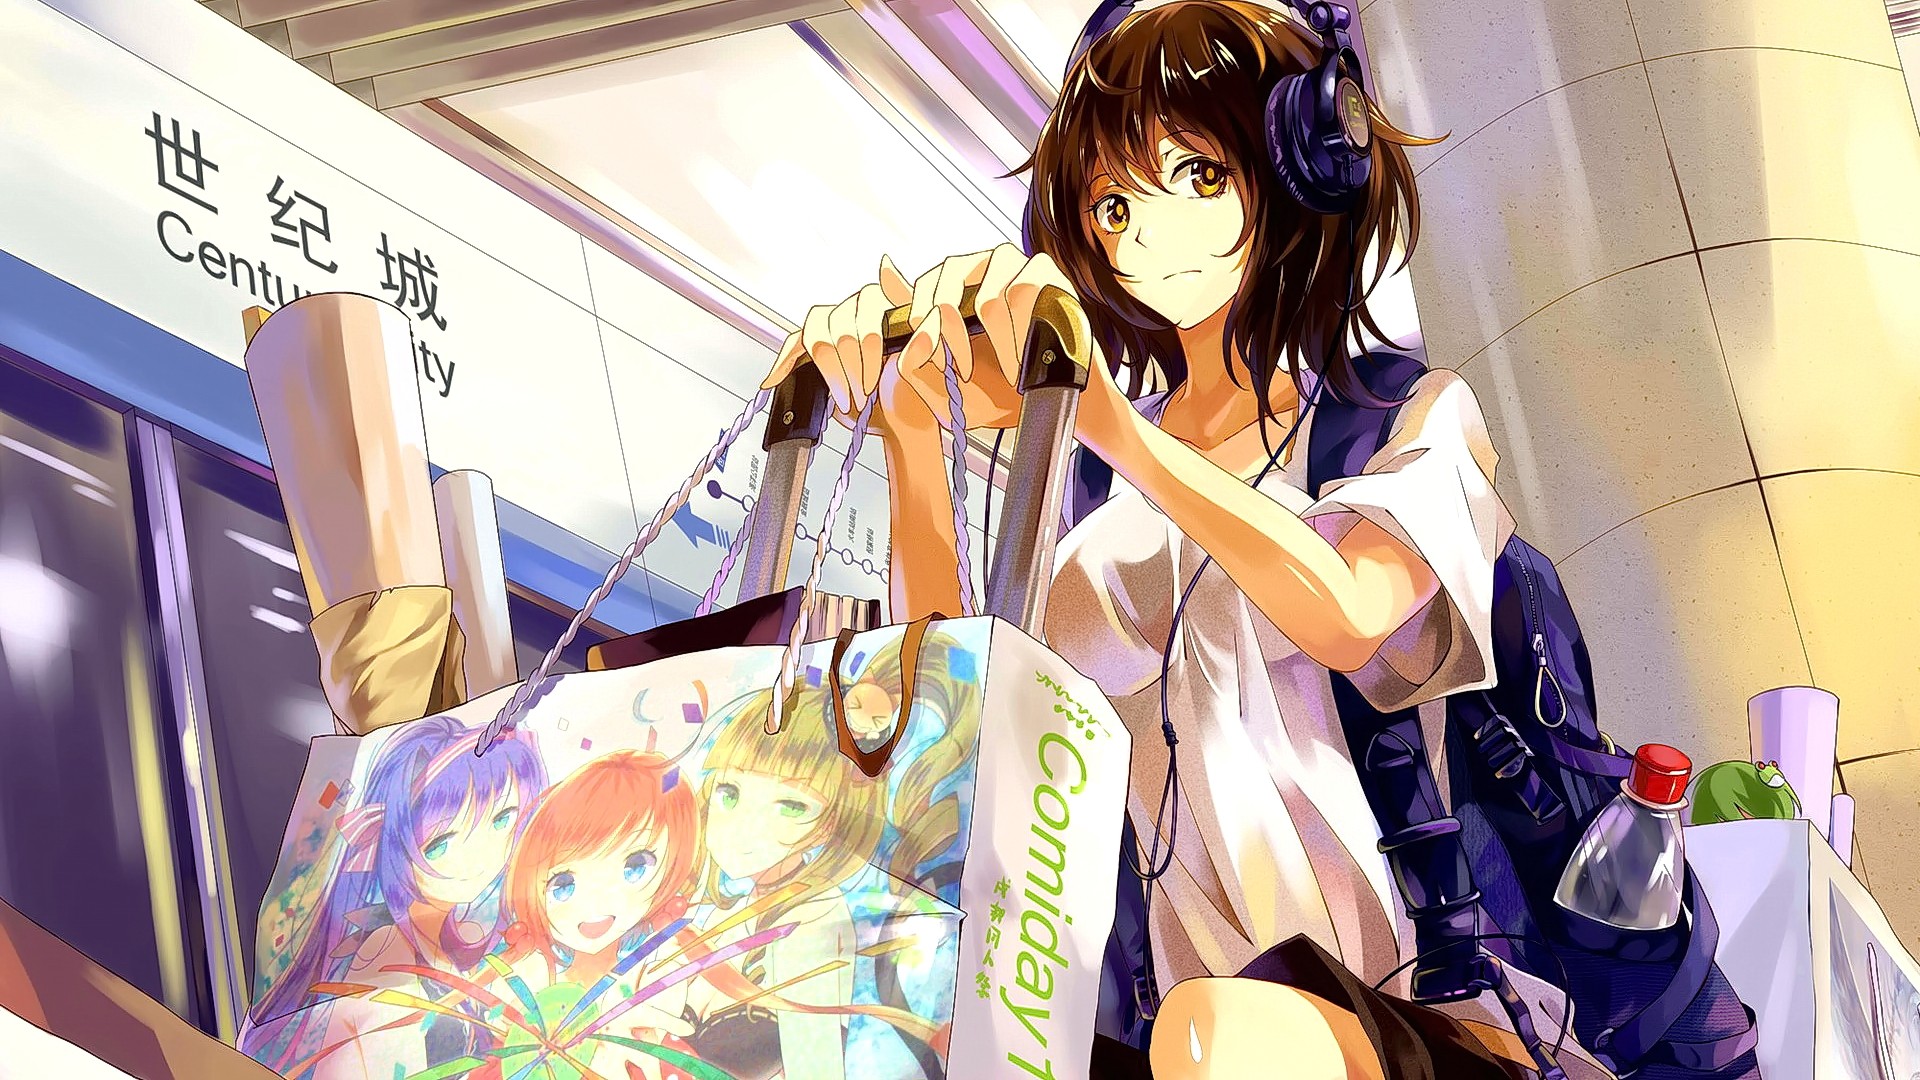 Anime 1920x1080 anime anime girls brunette short hair headsets looking at viewer yellow eyes shopping sitting bottles headphones